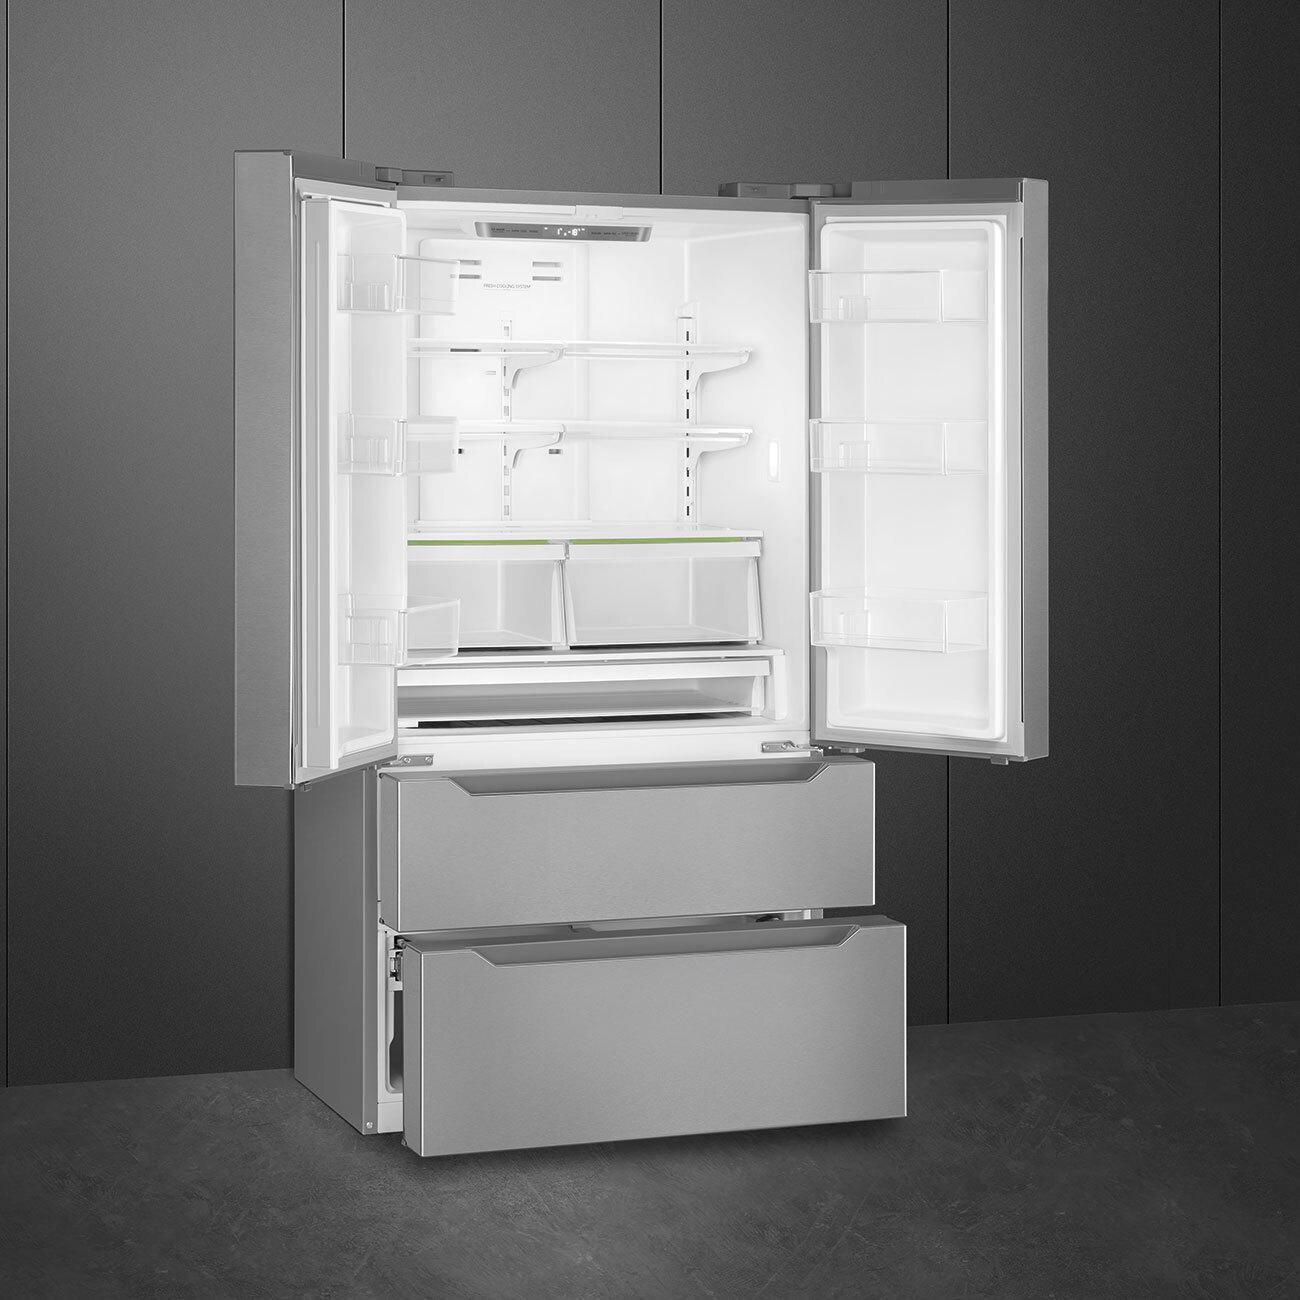 Smeg FQ55UFX Refrigerator Stainless Steel Fq55Ufx